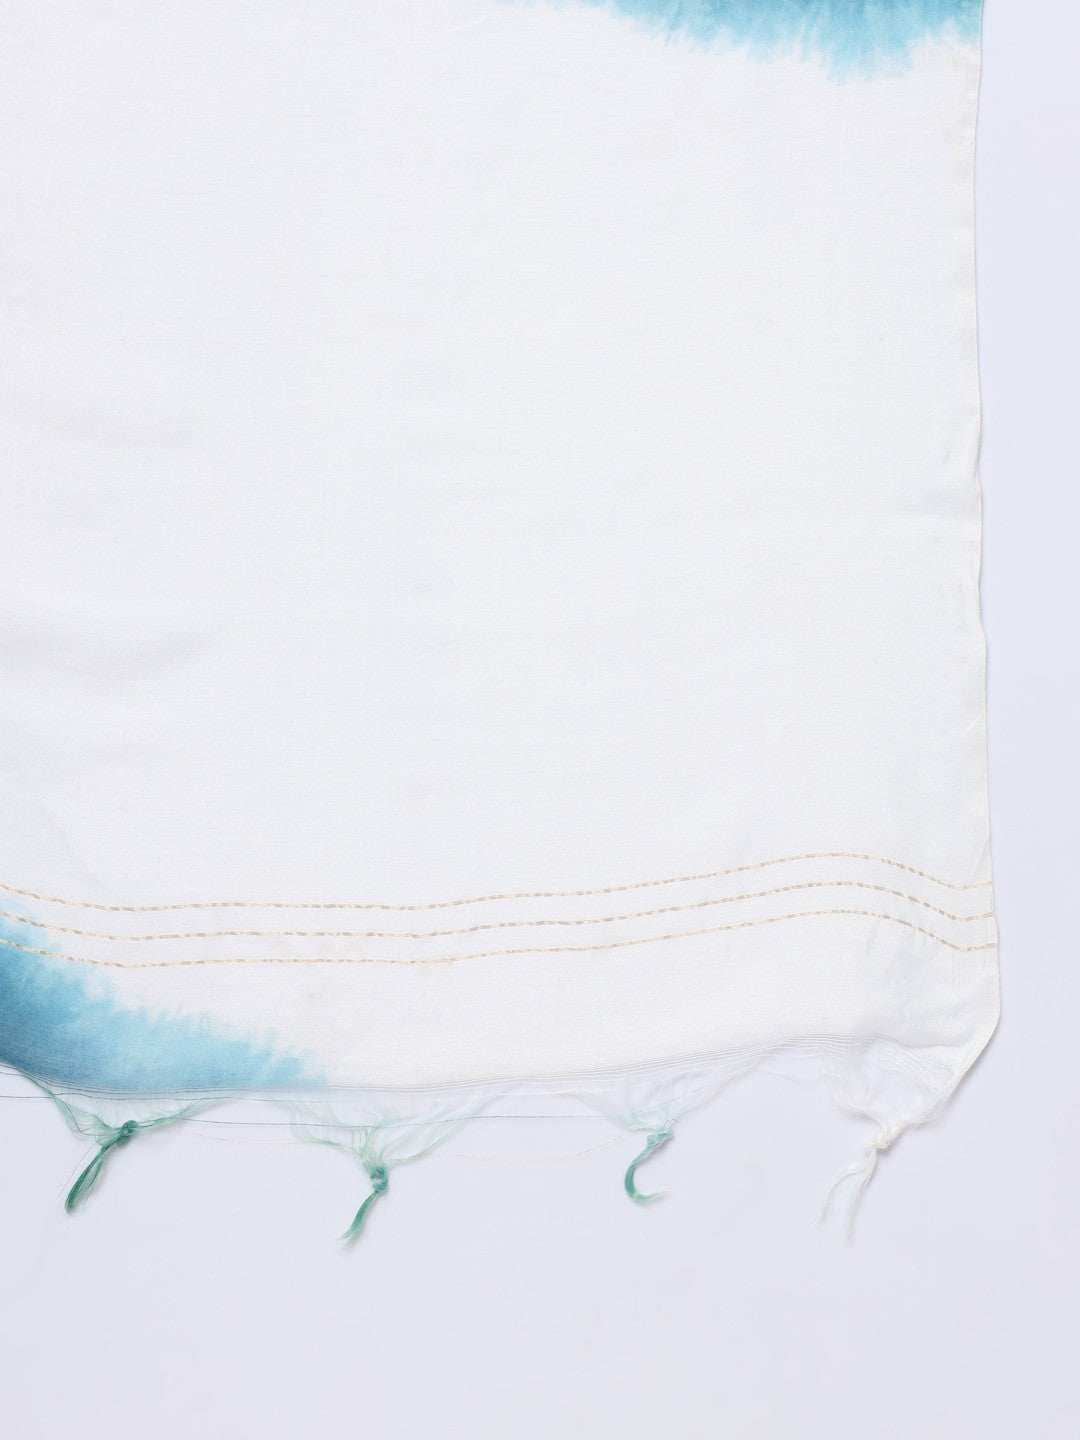 Blue Colour South Silk Embroidery Work Casual Wear Kurta Pant Dupatta Set For Women's